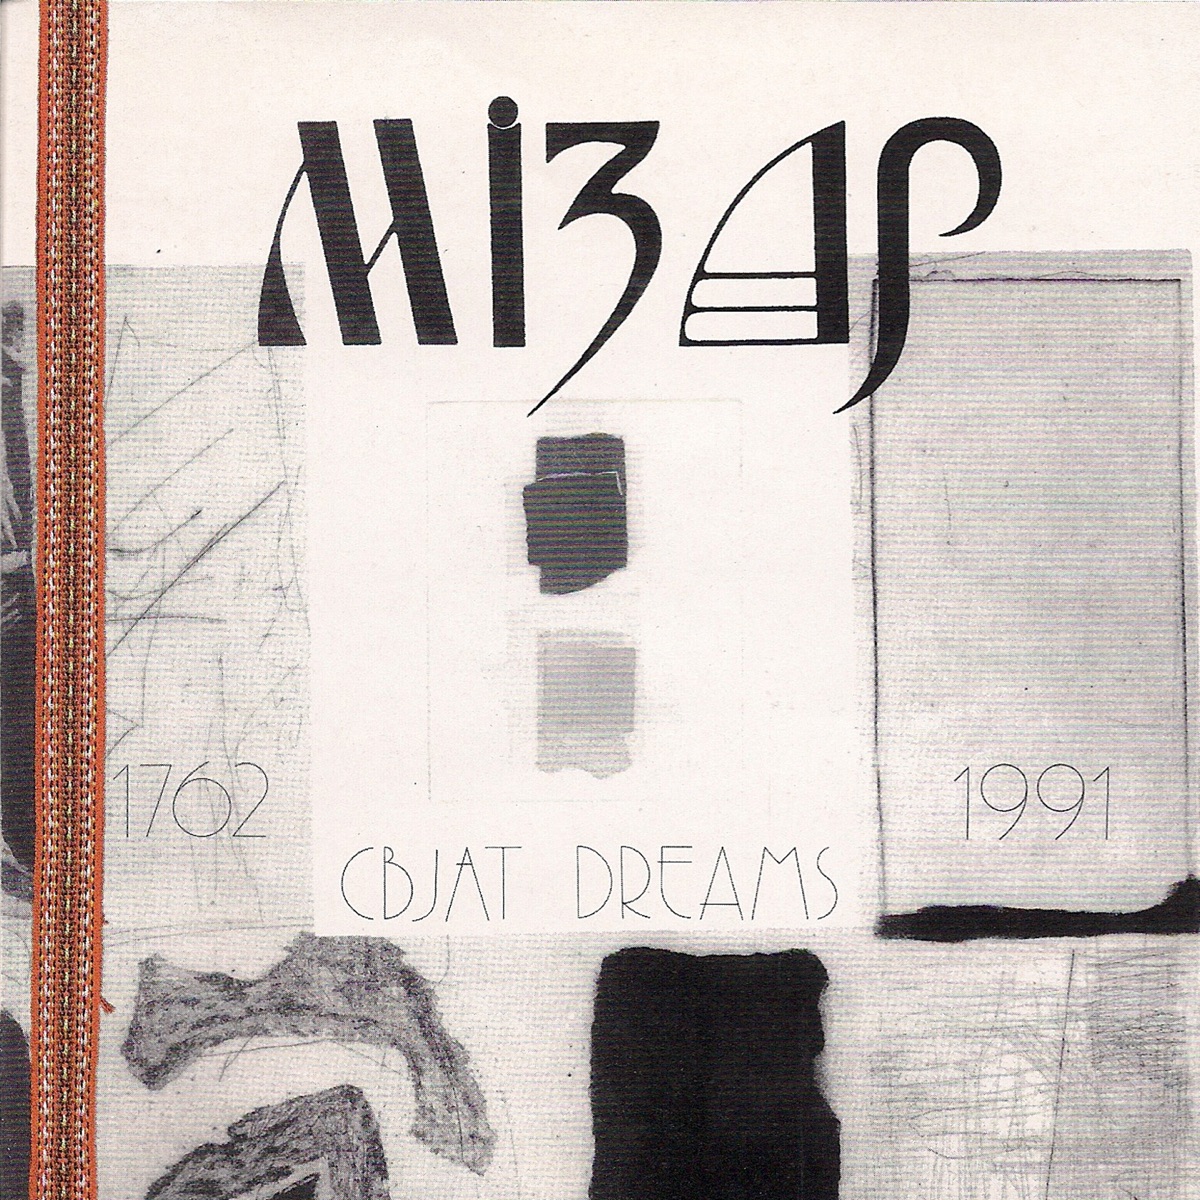 Read more about the article Godišnjica objavljivanja albuma Svjat Dreams 1762-1991 grupe Mizar